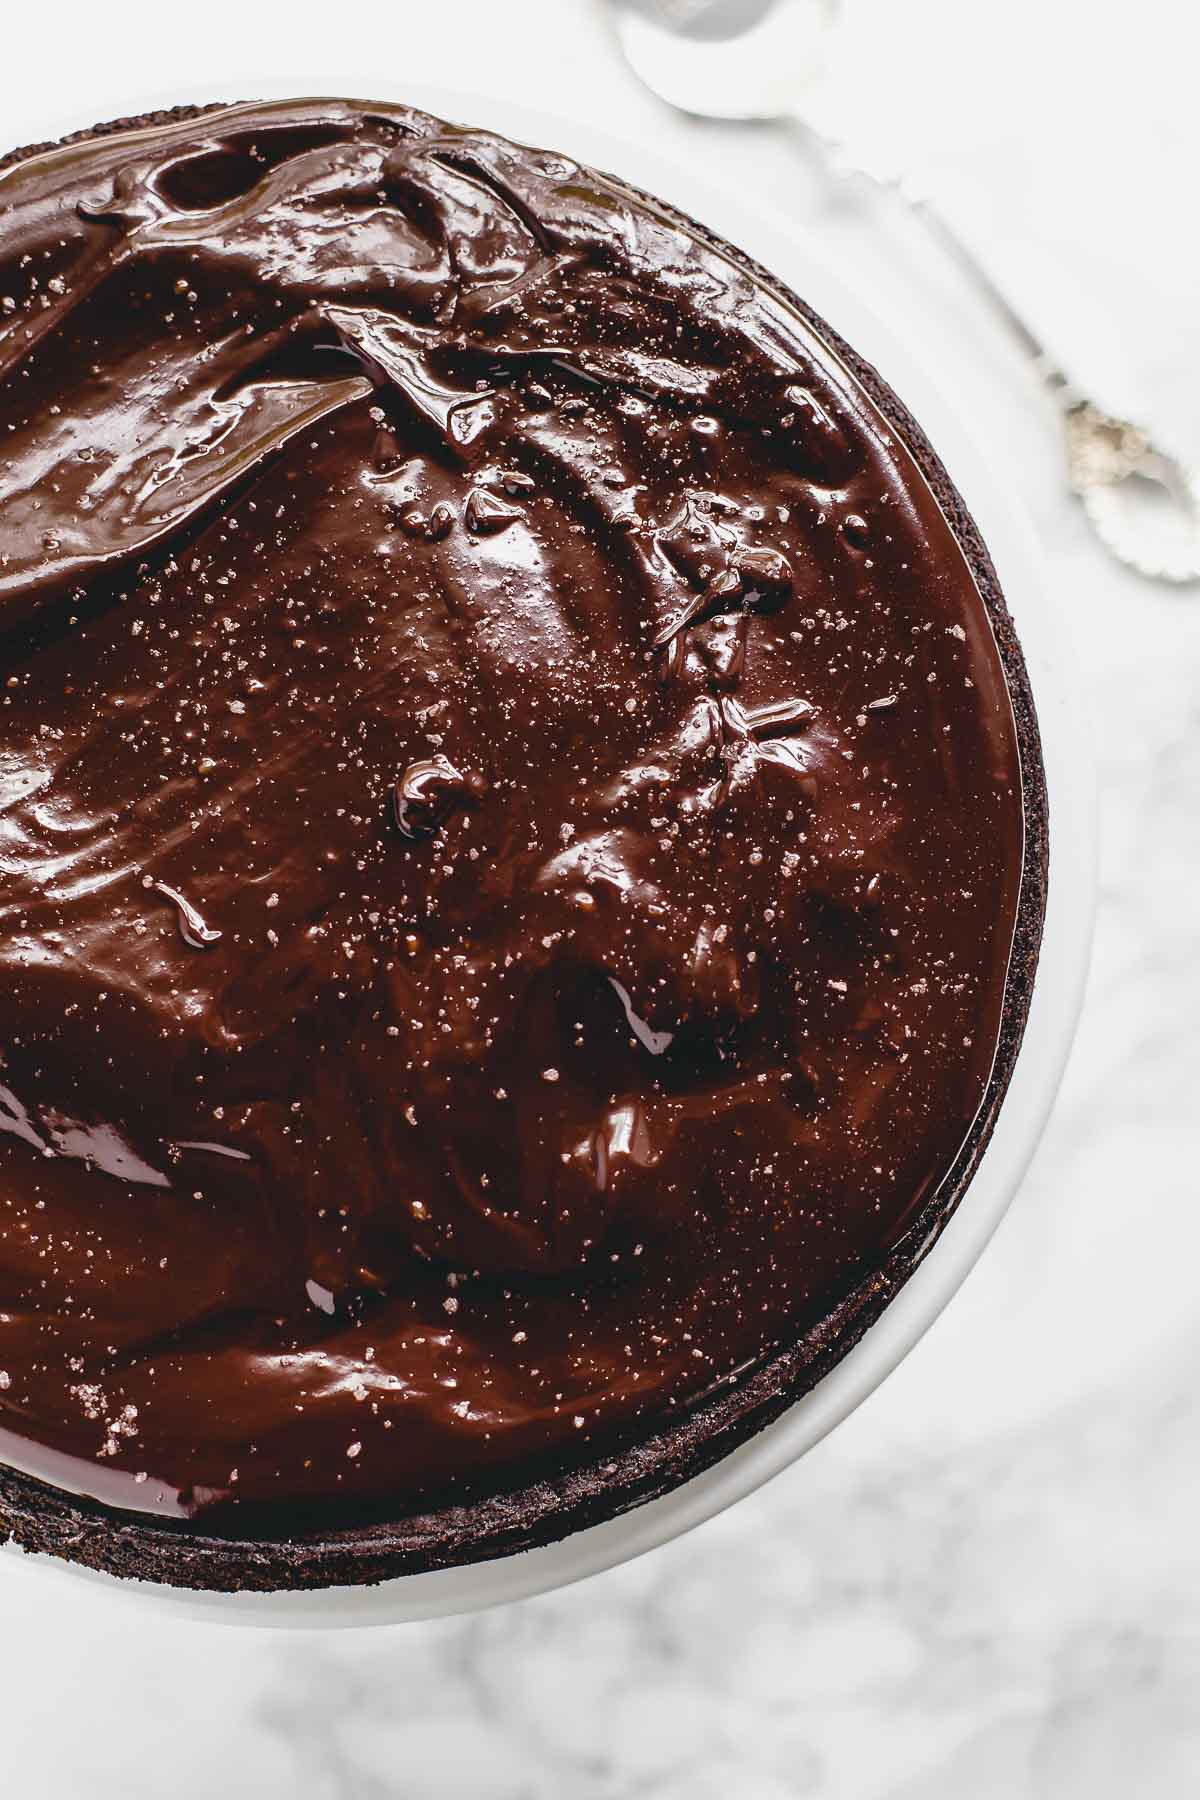 Flourless chocolate cake on a serving platter.